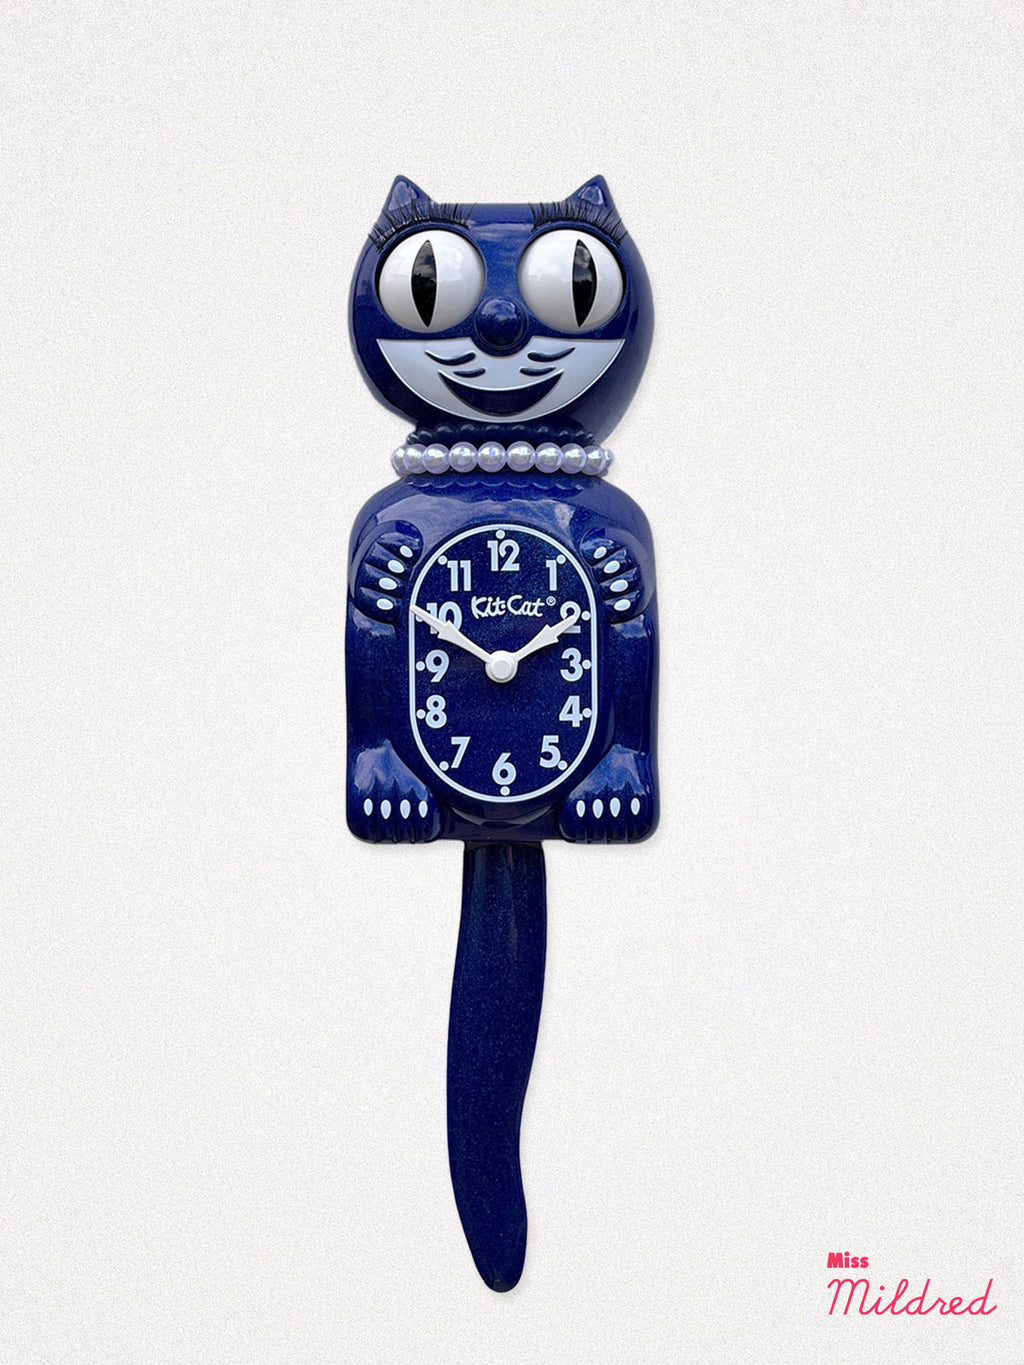 Kit Cat Clock - Original Large Size - Galaxy Blue Necklace